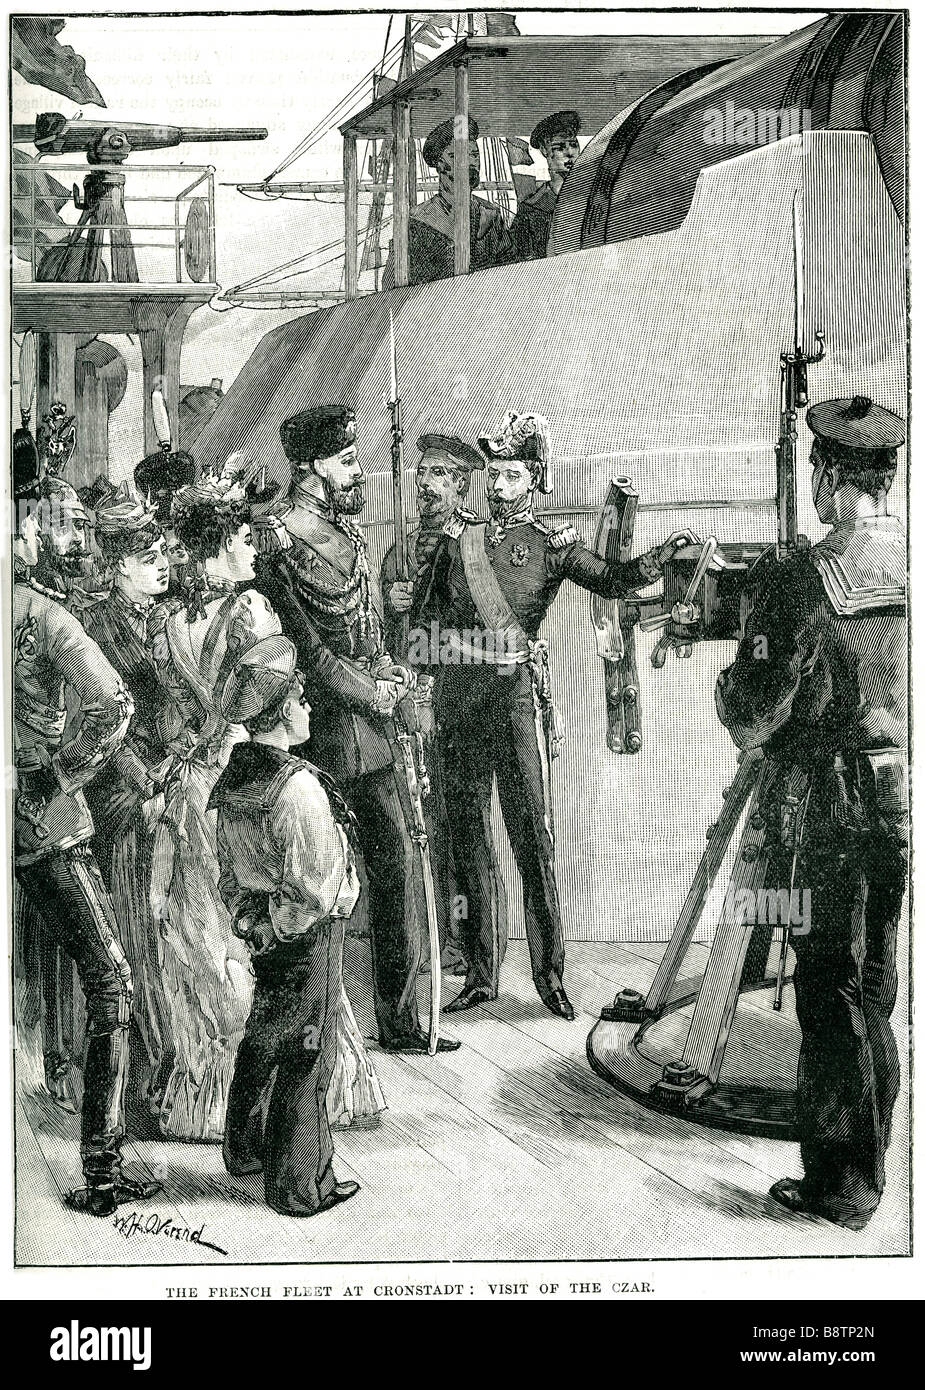 La flotta francese cronstadt visita lo zar 1891 Kronstadt Franco-Russian Alliance Foto Stock